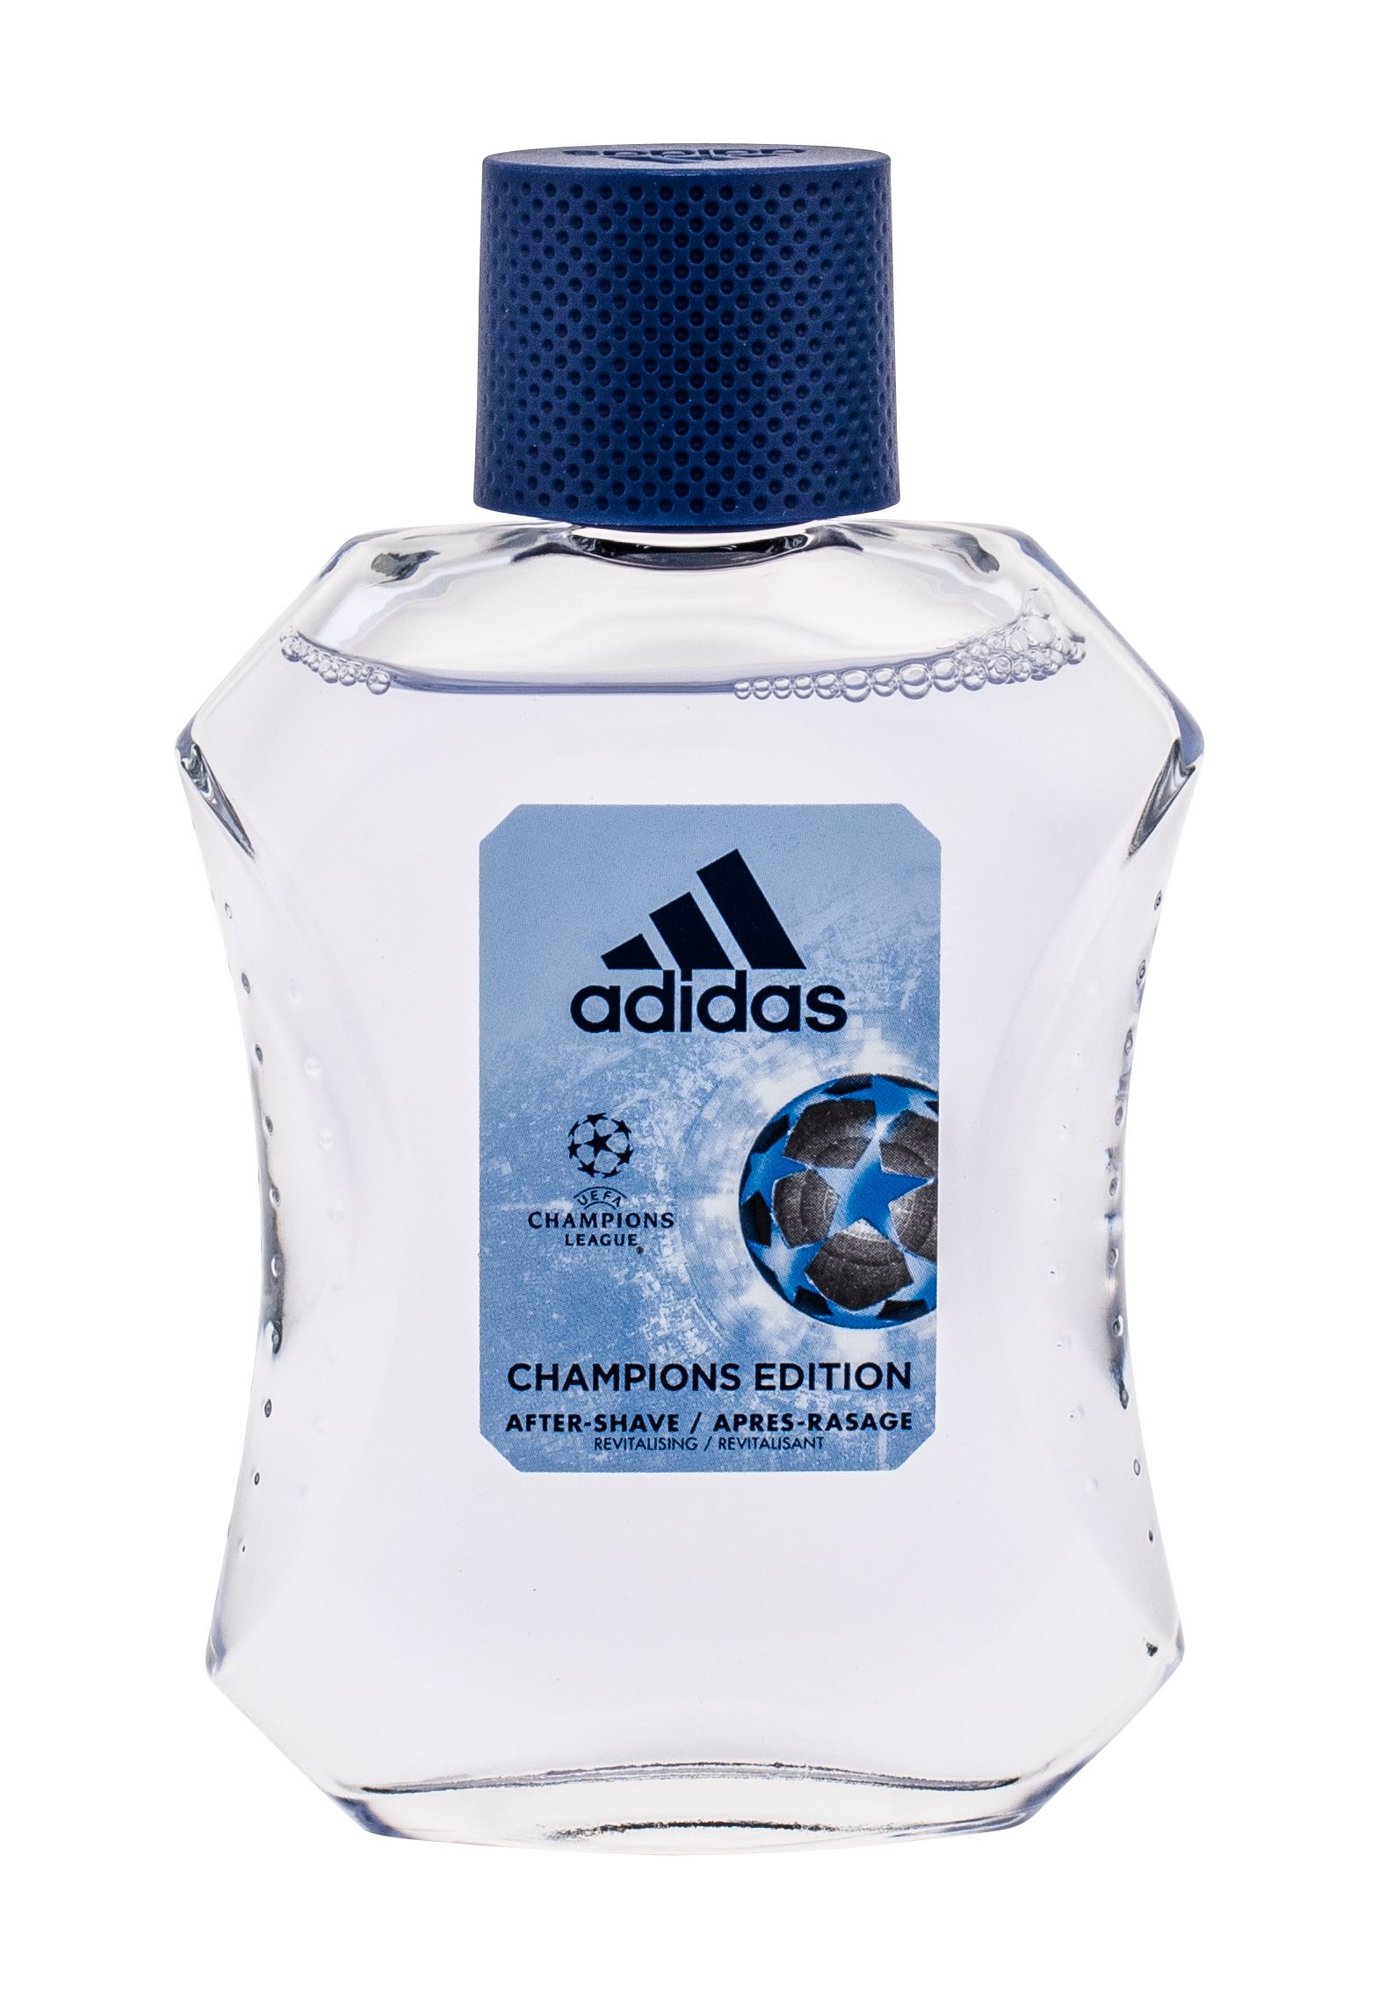 Adidas UEFA Champions League Champions Edition vanduo po skutimosi